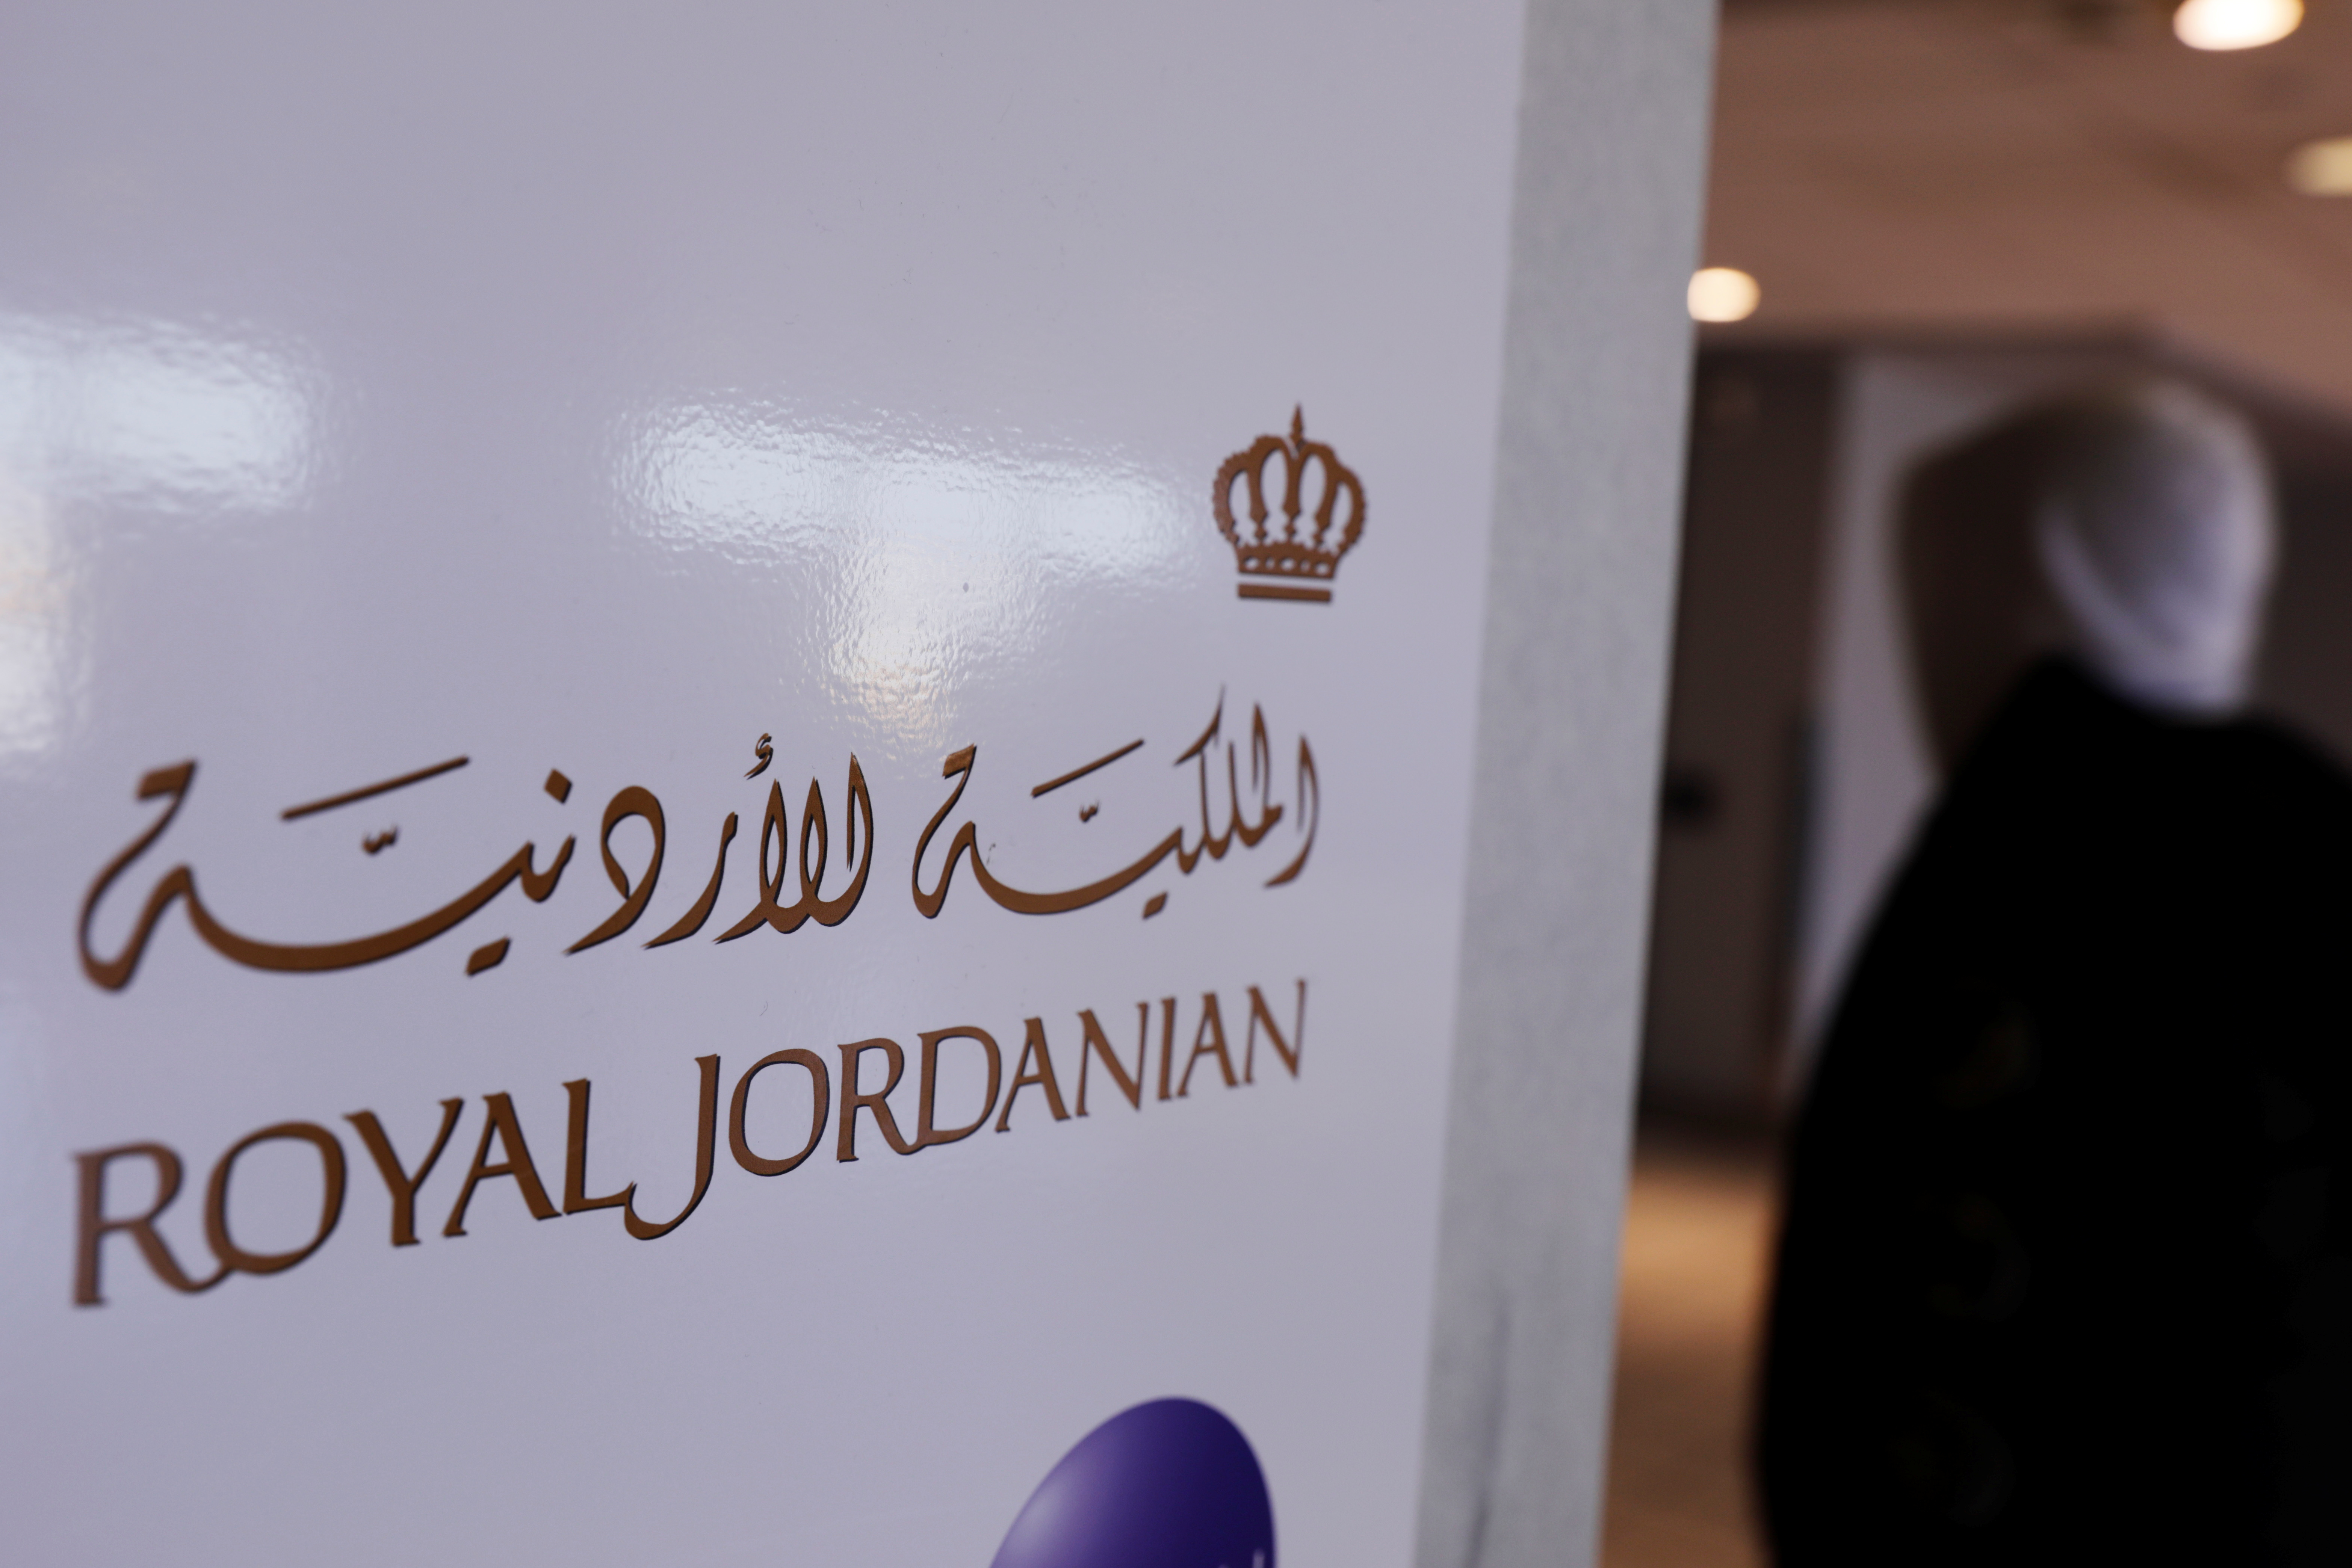 Jordanian royal Royal Jordanian